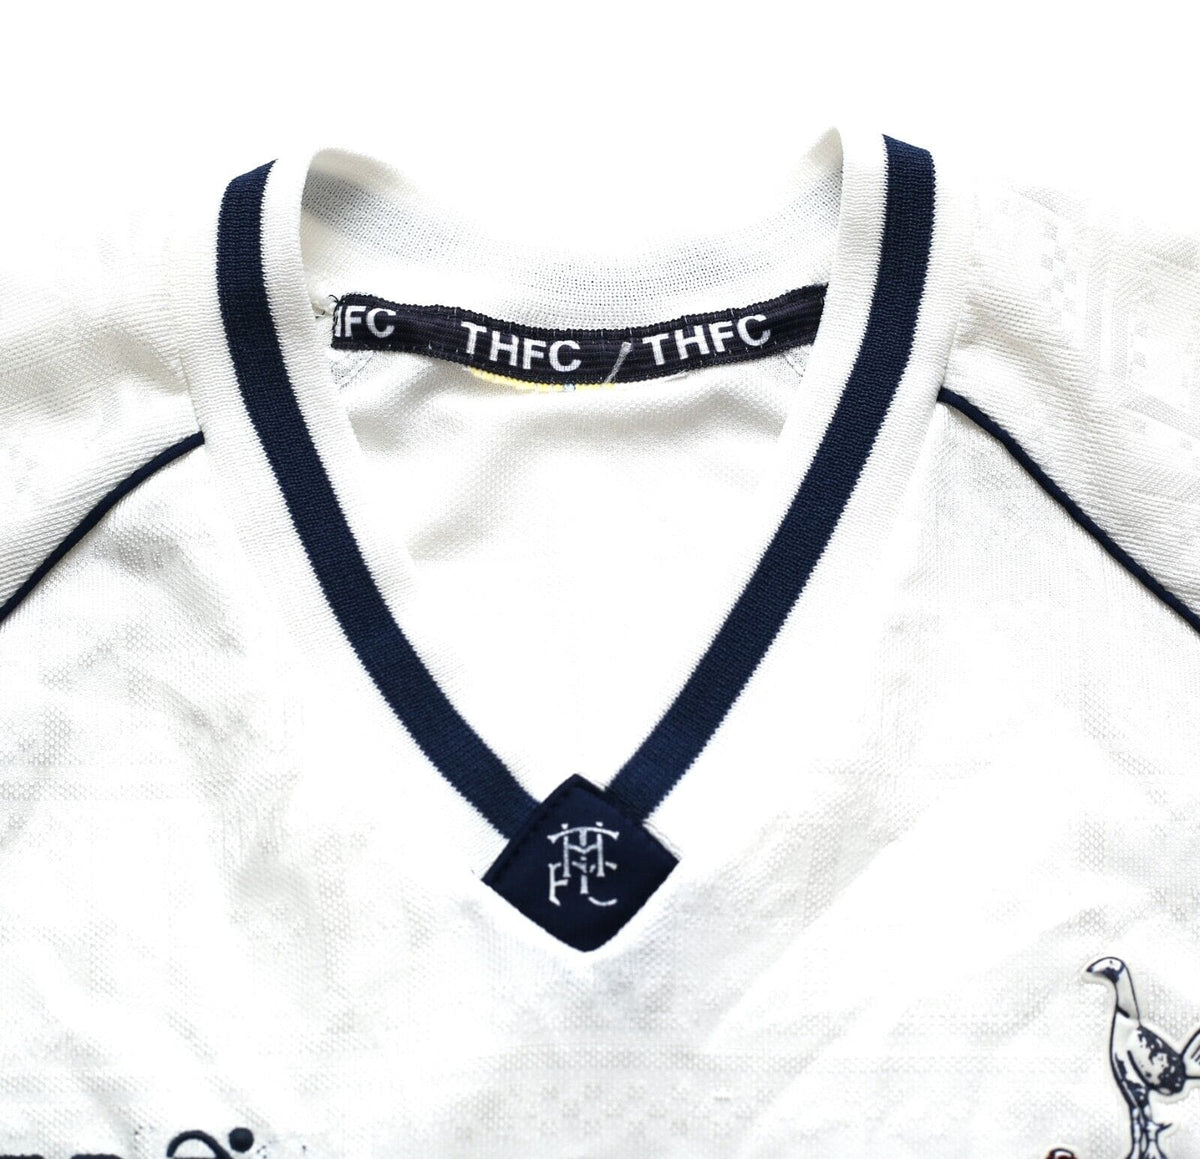 Classic and Retro Tottenham Hotspur Football Shirts � Vintage